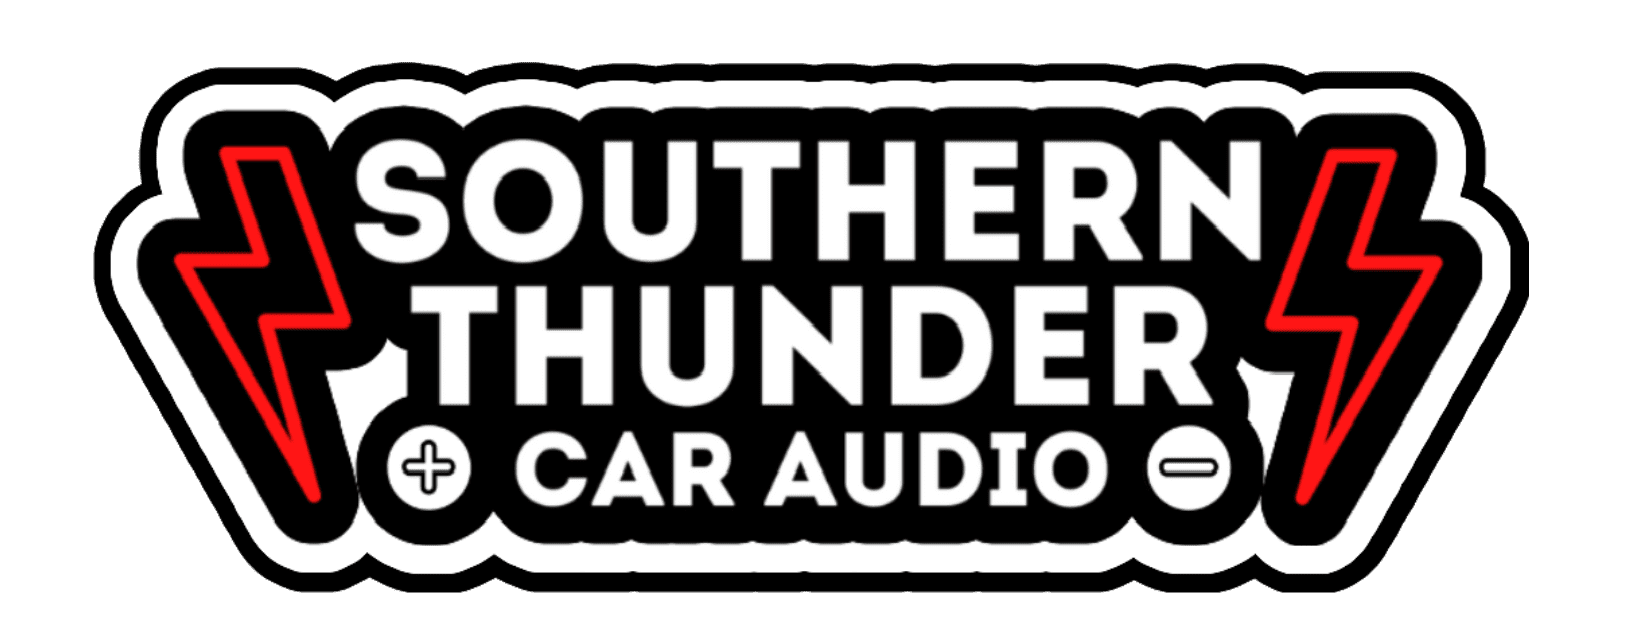 Southern thunder car audio logo.